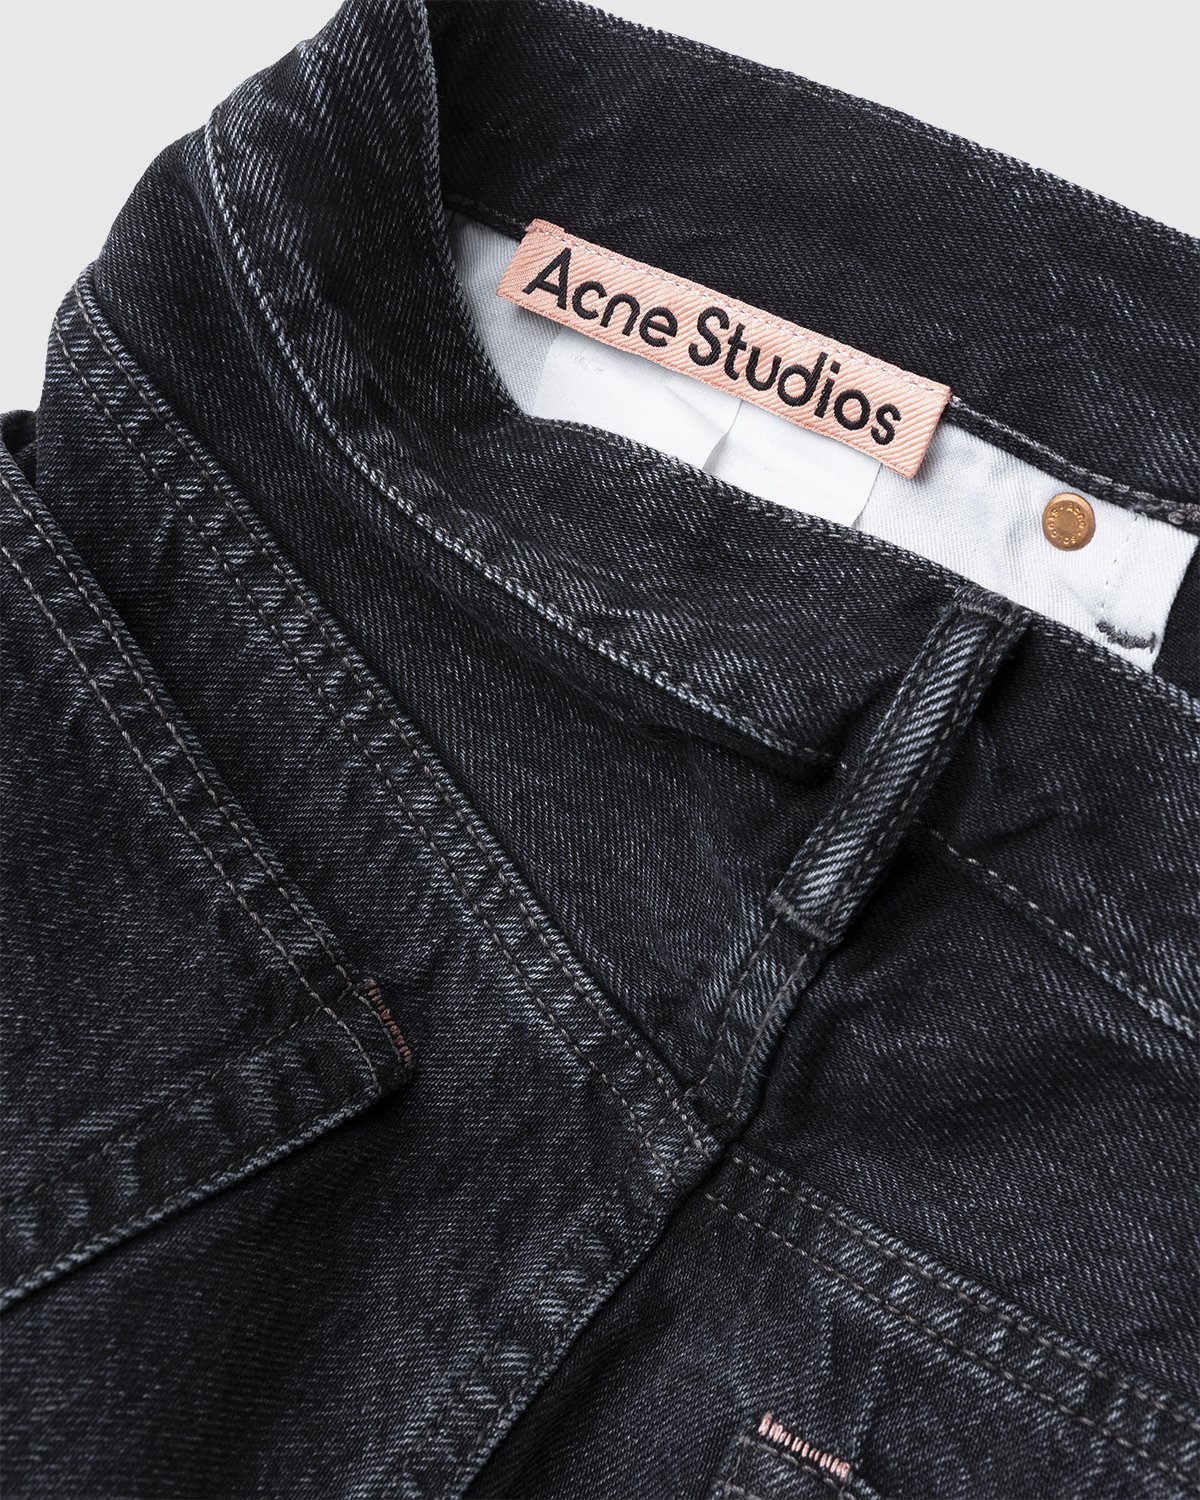 Acne Studios - Brutus 2021M Boot Cut Jeans Black - Clothing - Black - Image 5